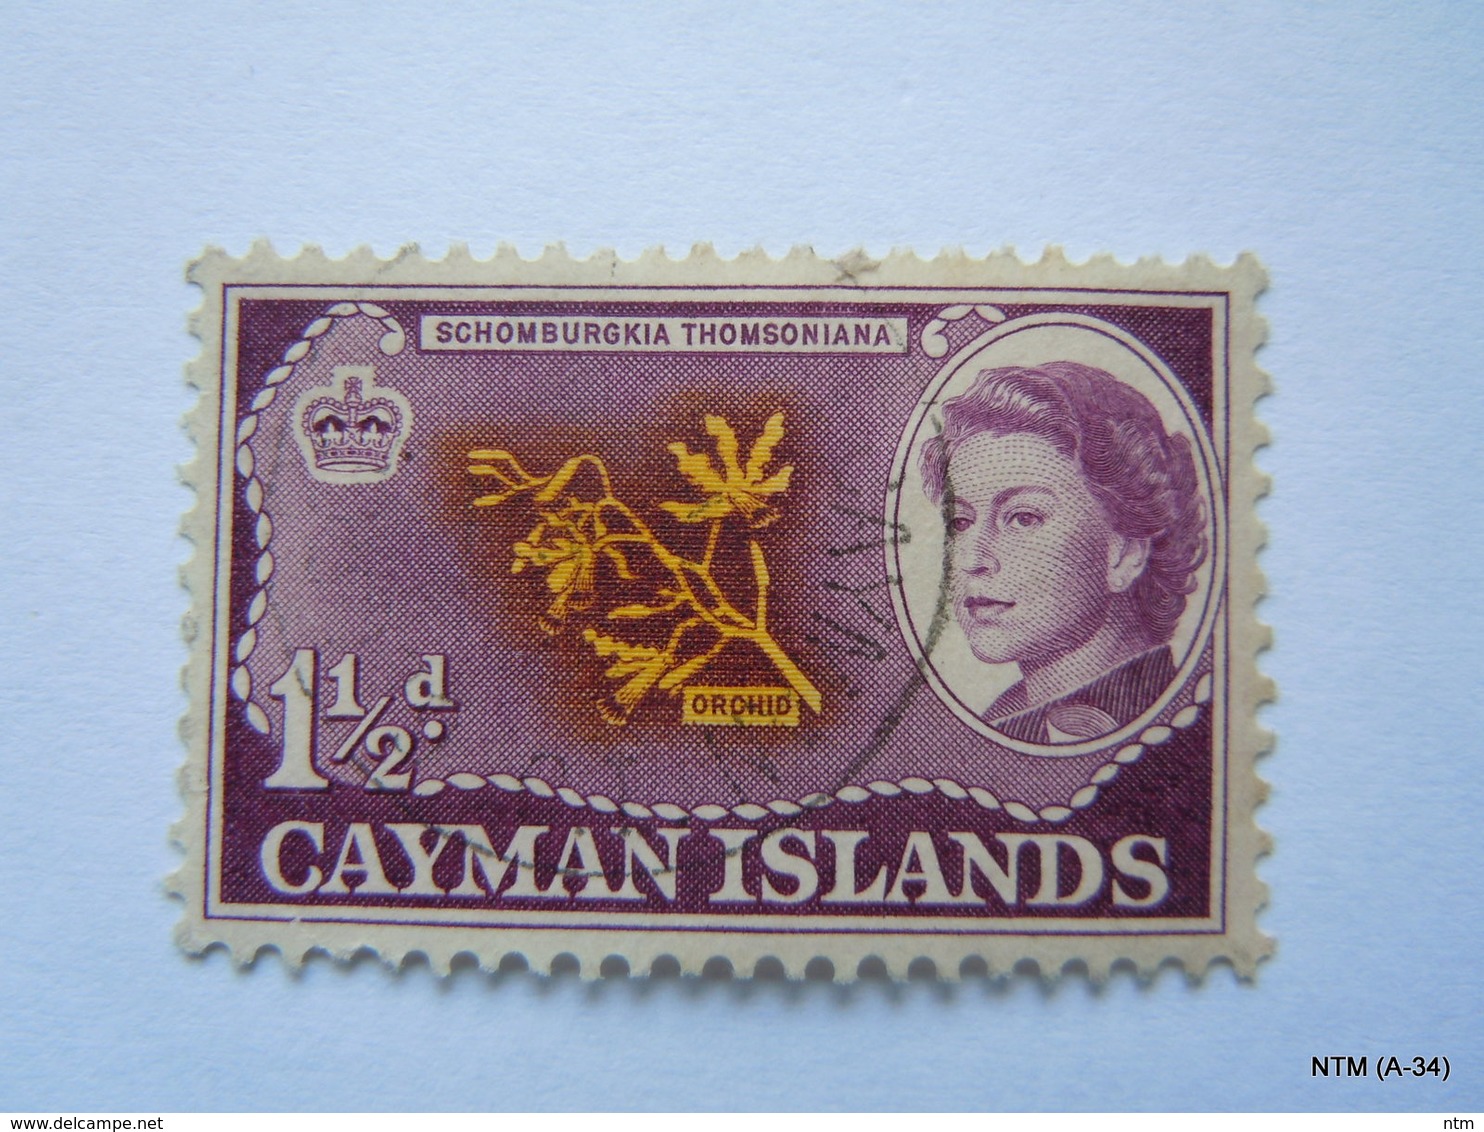 CAYMAN ISLANDS 1962, Queen Elizabeth II, Orchid, 1,1/2d. SG 167. Used. - Cayman Islands